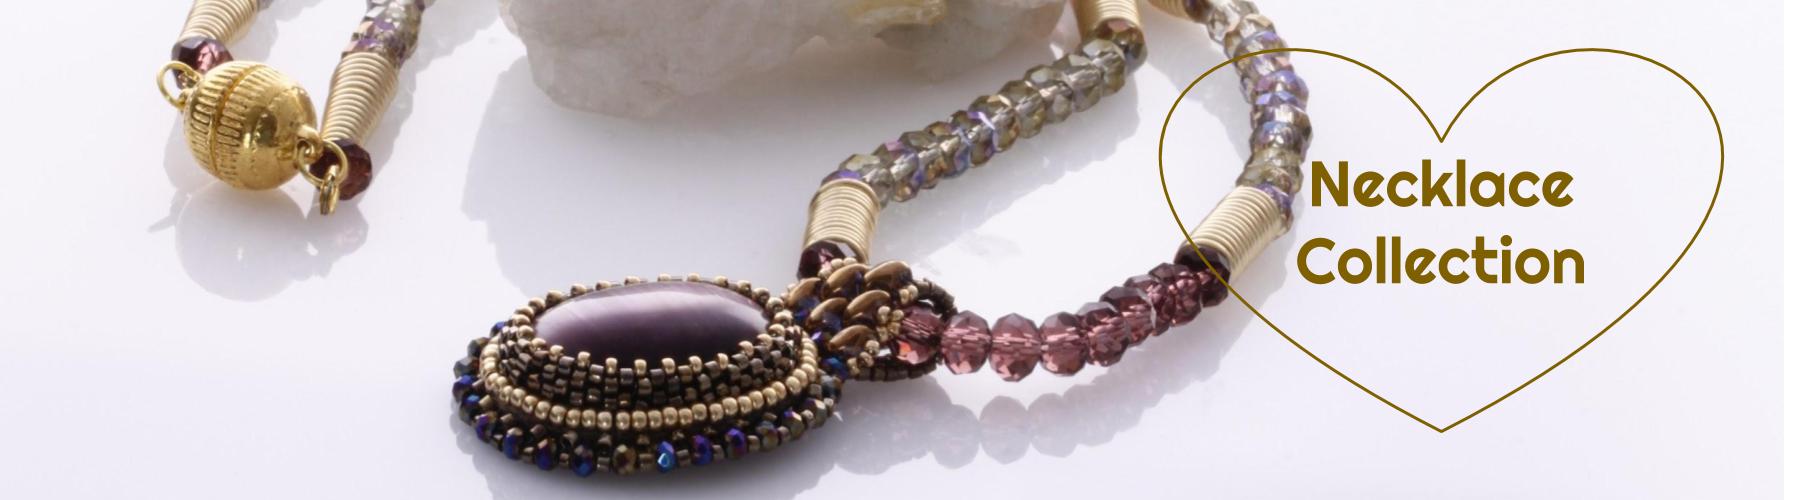 Necklace Collection - Kalitheo Jewellery - kalitheo.com.au